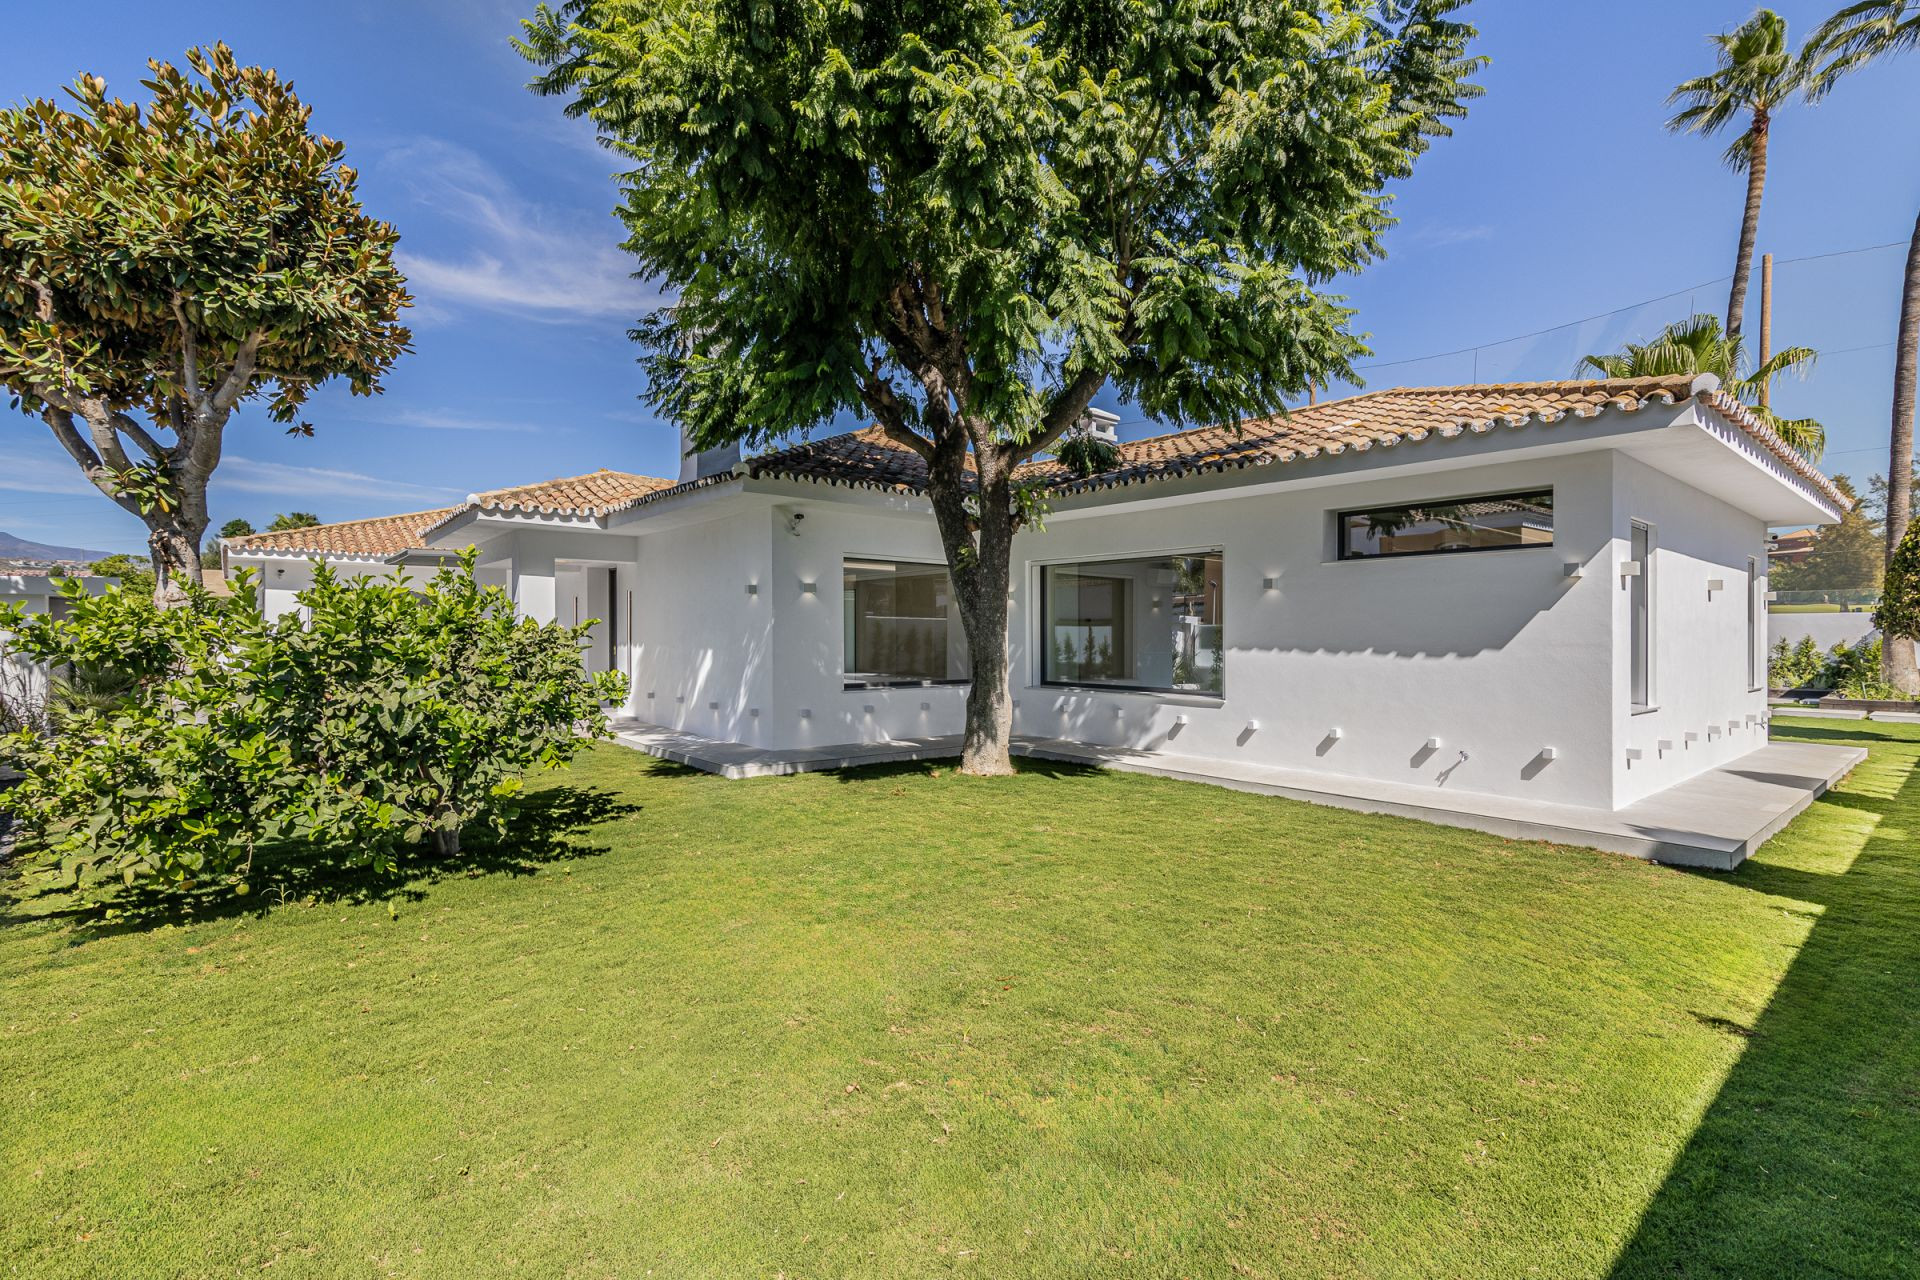 Villa for sale in San Pedro de Alcantara, Costa del Sol